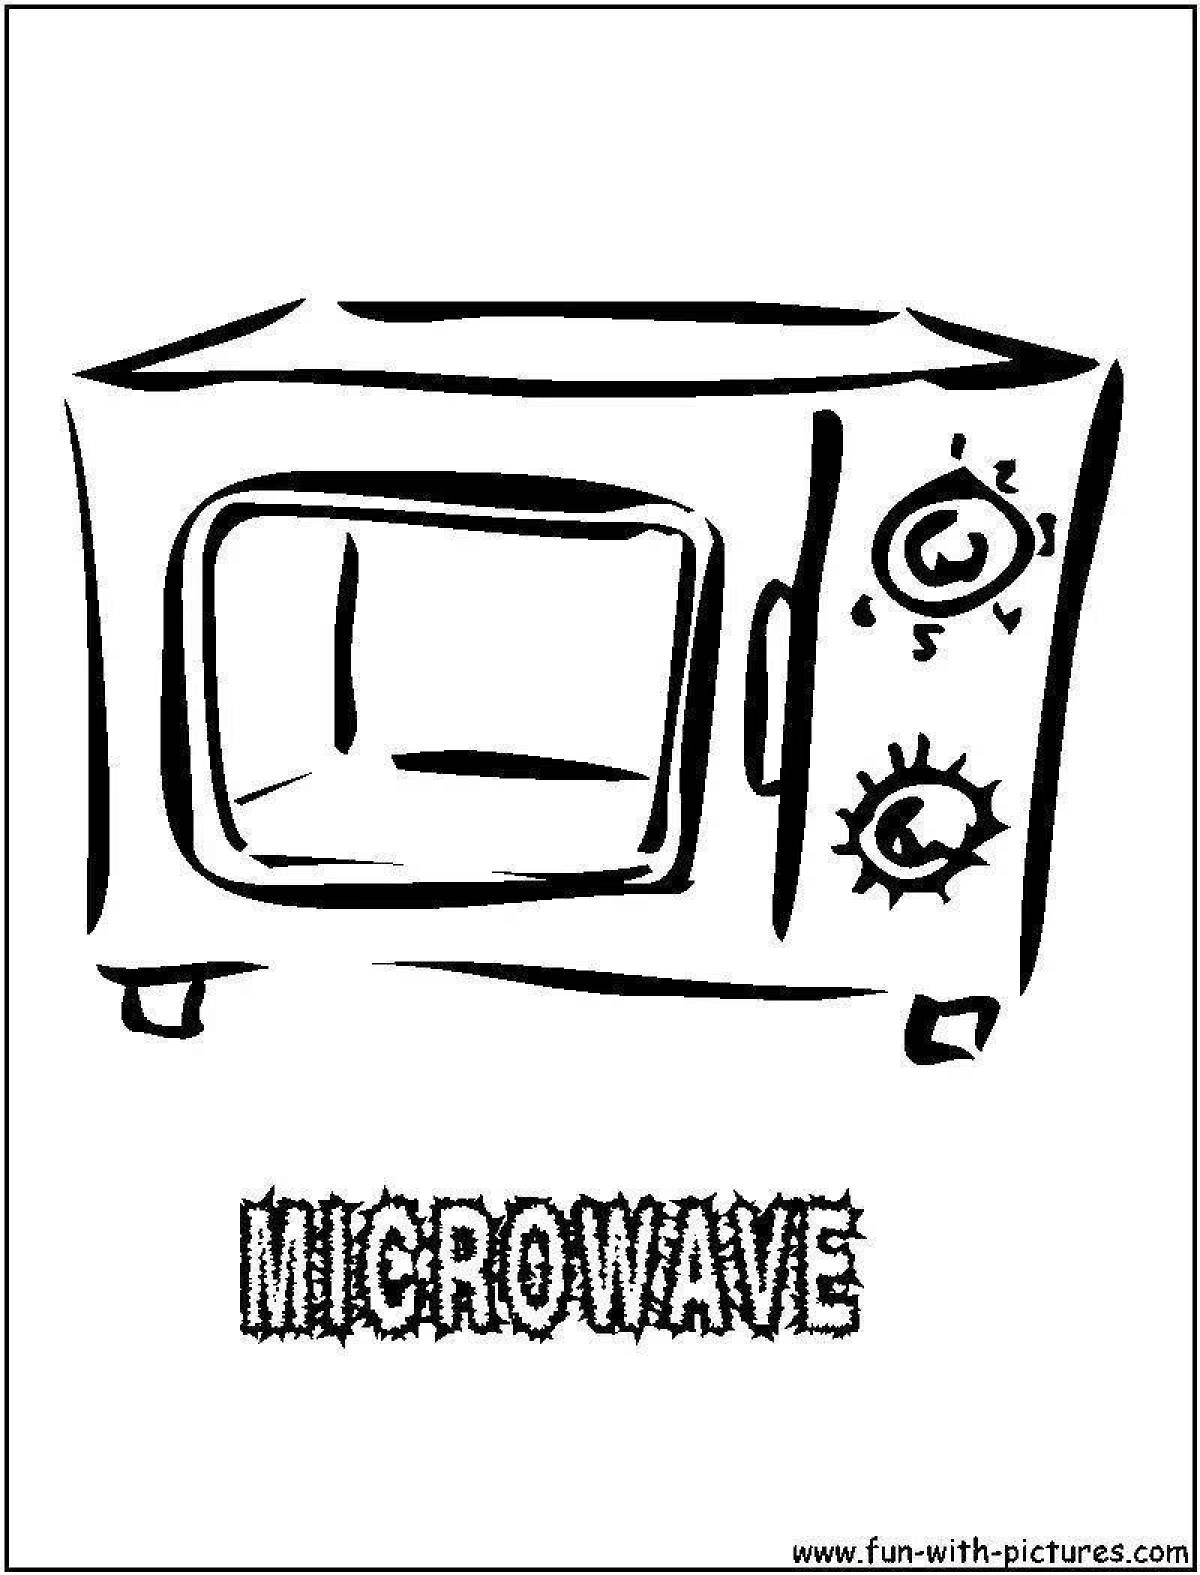 Incredible microwave coloring book